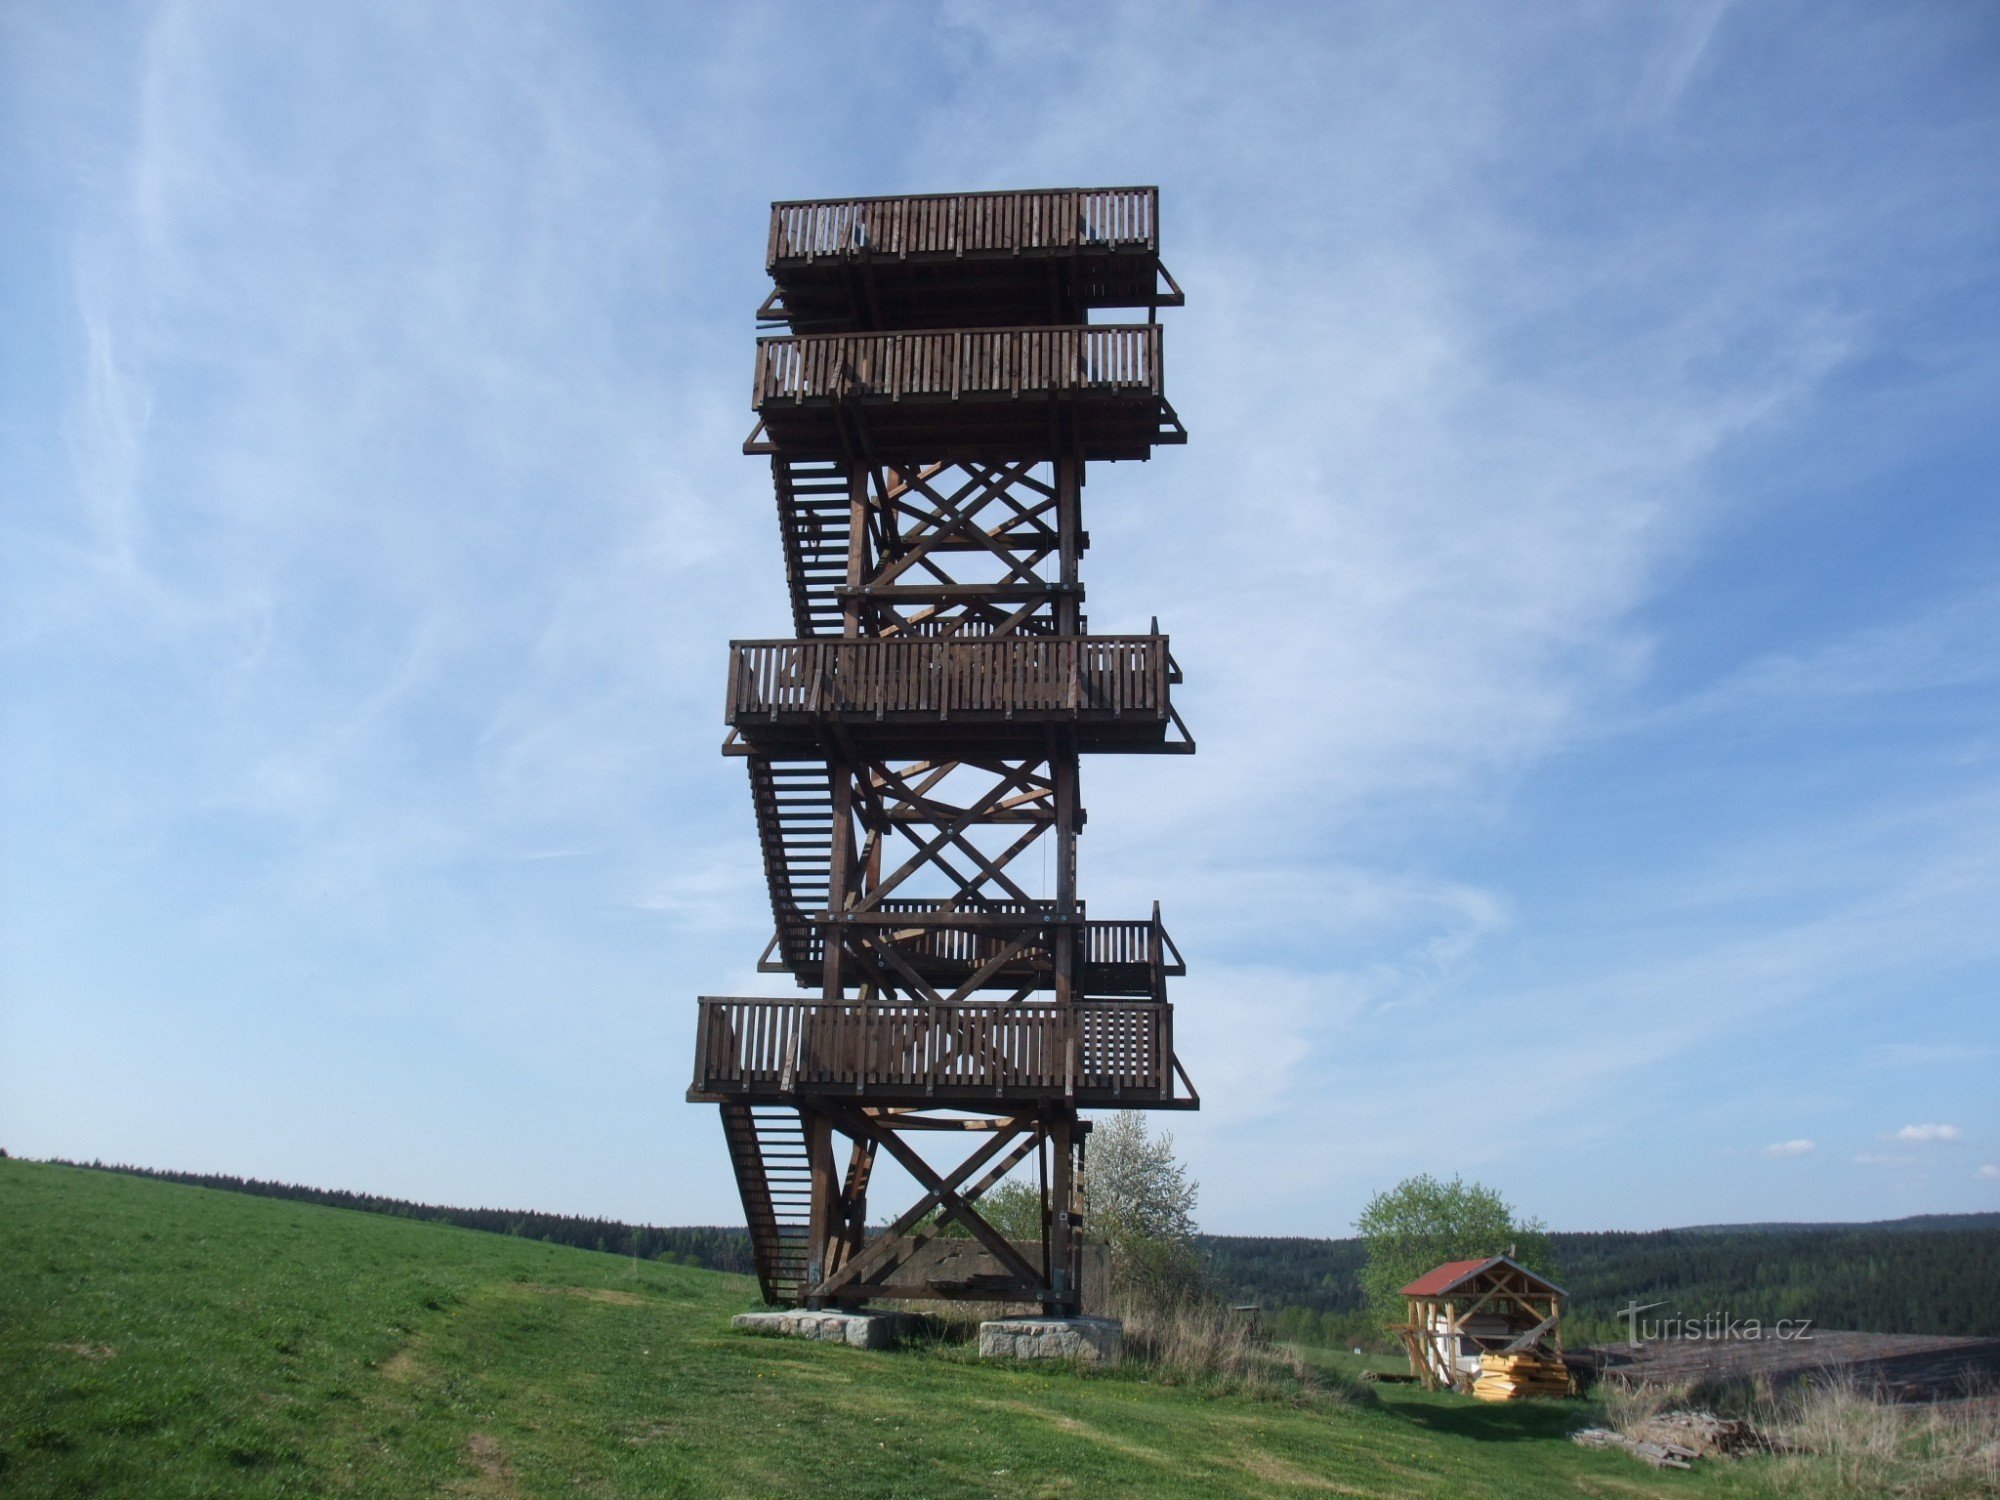 Lookout tower near Strejce, Luby /Schőnbach/